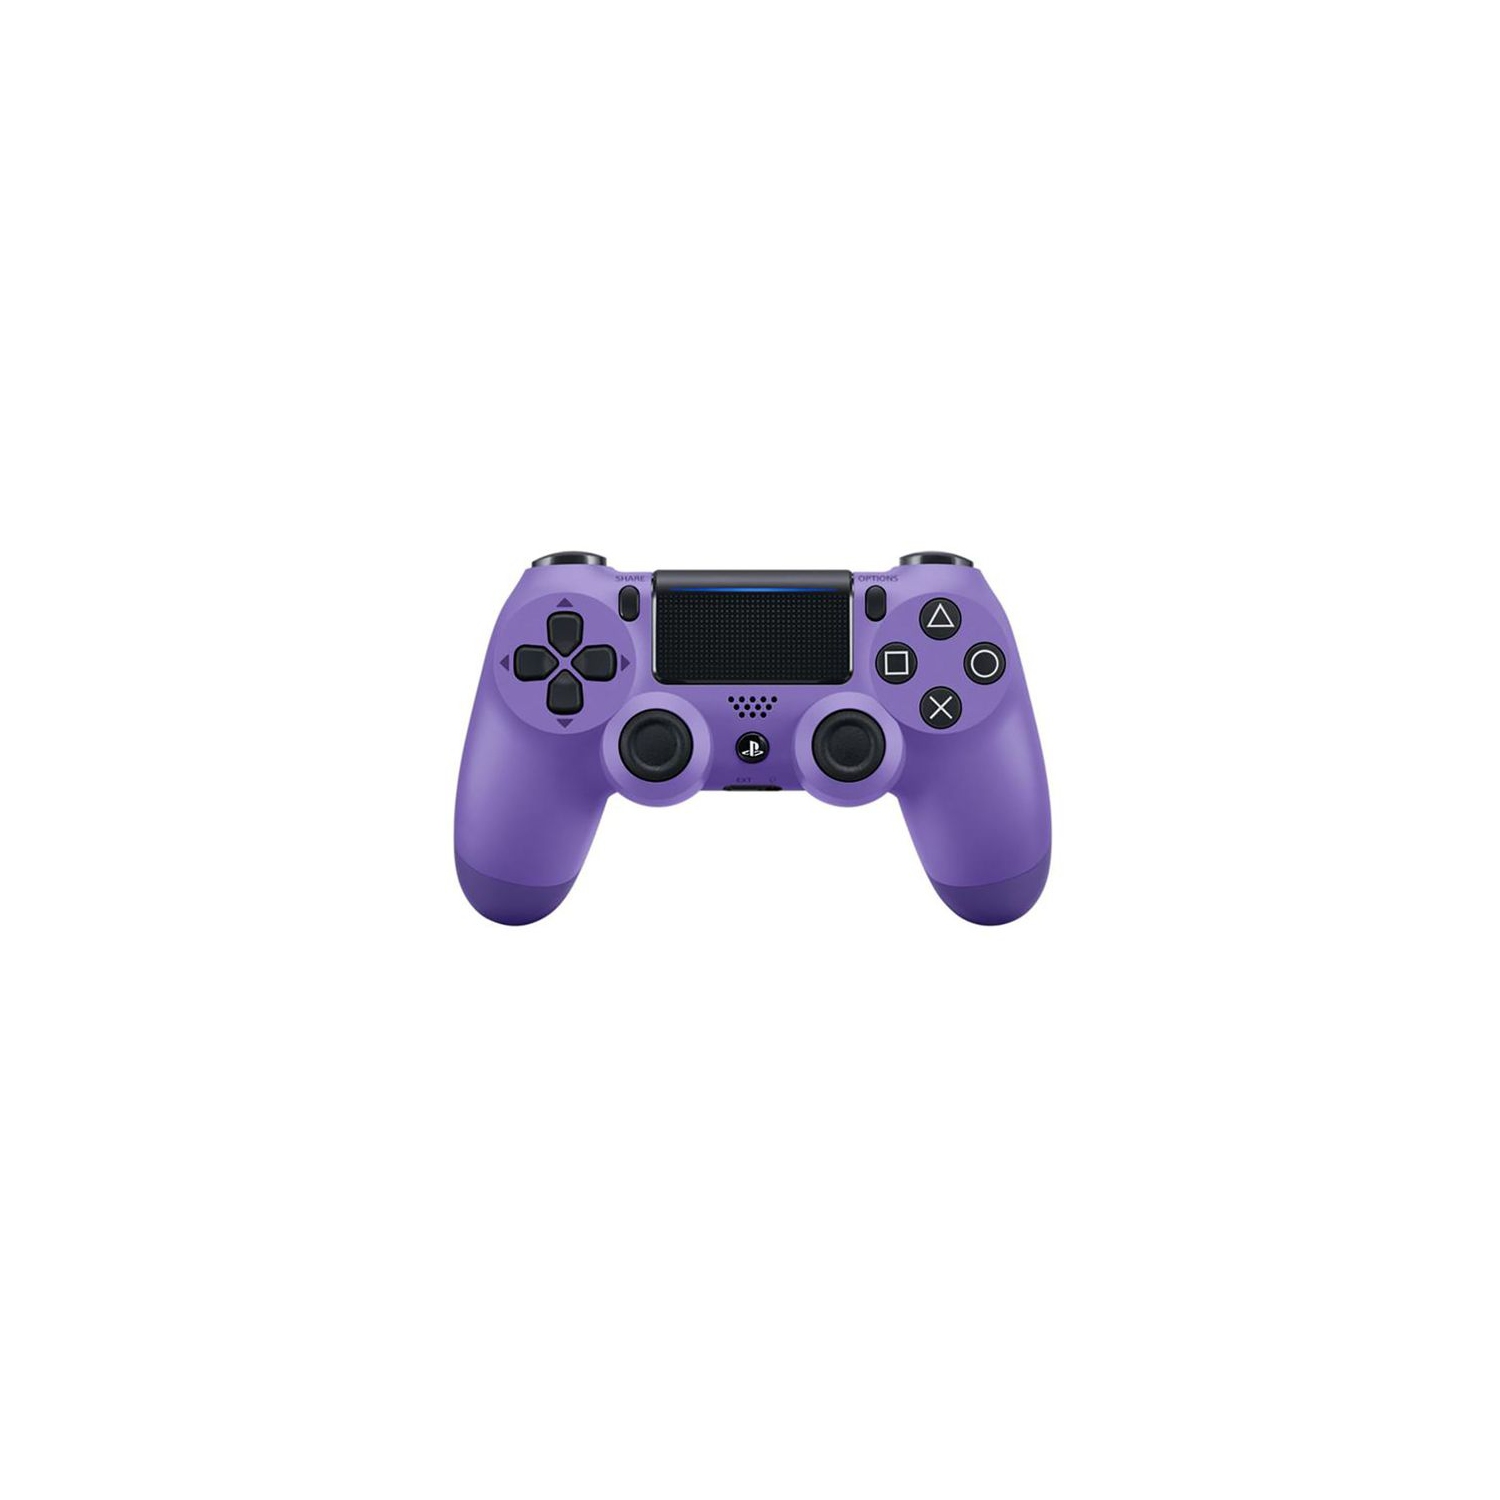 Sony PS4 Dualshock 4 Wireless Controller Electric Purple - CERTIFIED REFURBISHED